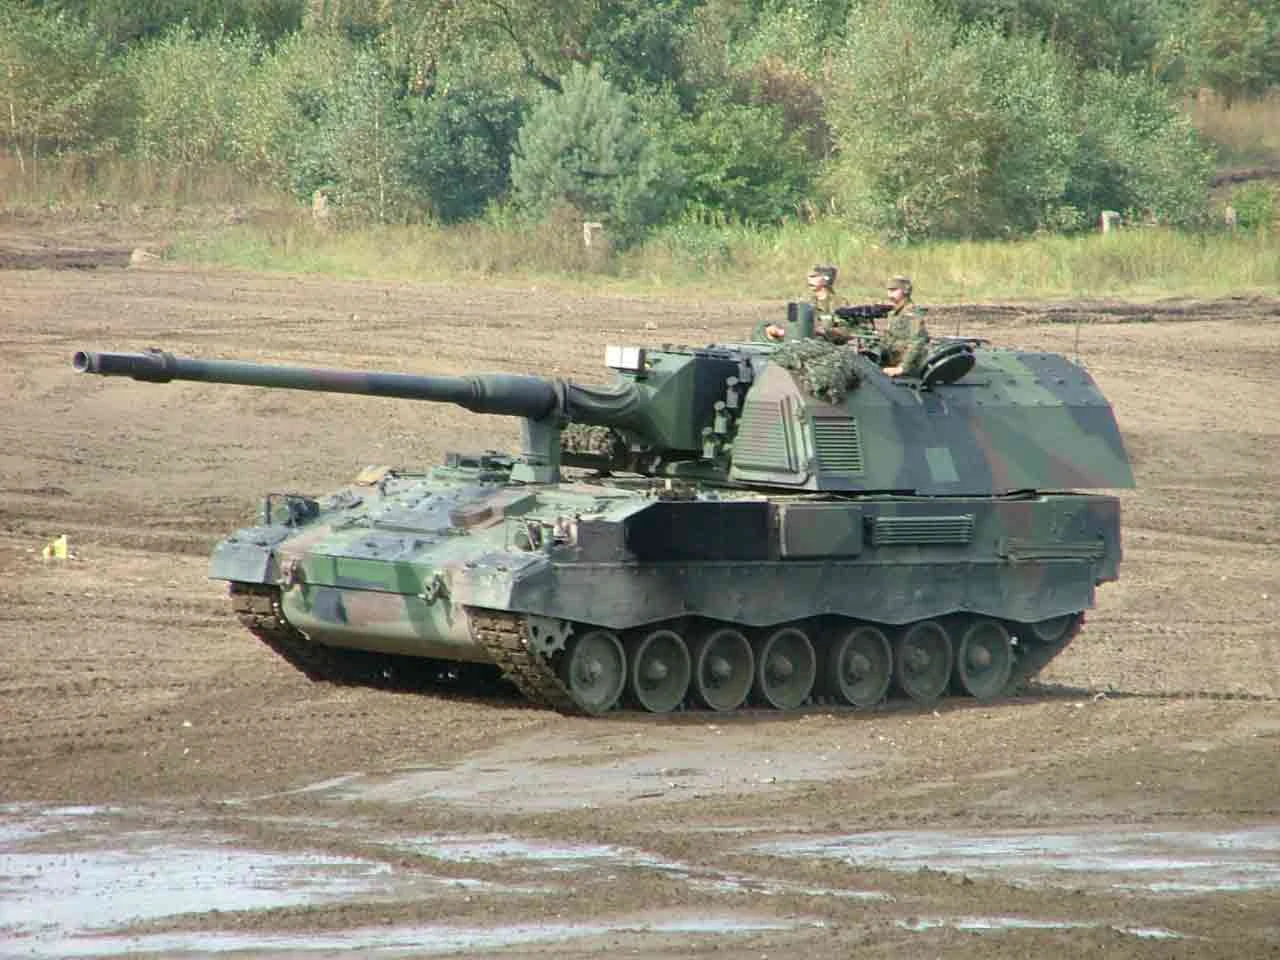 PzH 2000 или Panzerhaubitze 2000